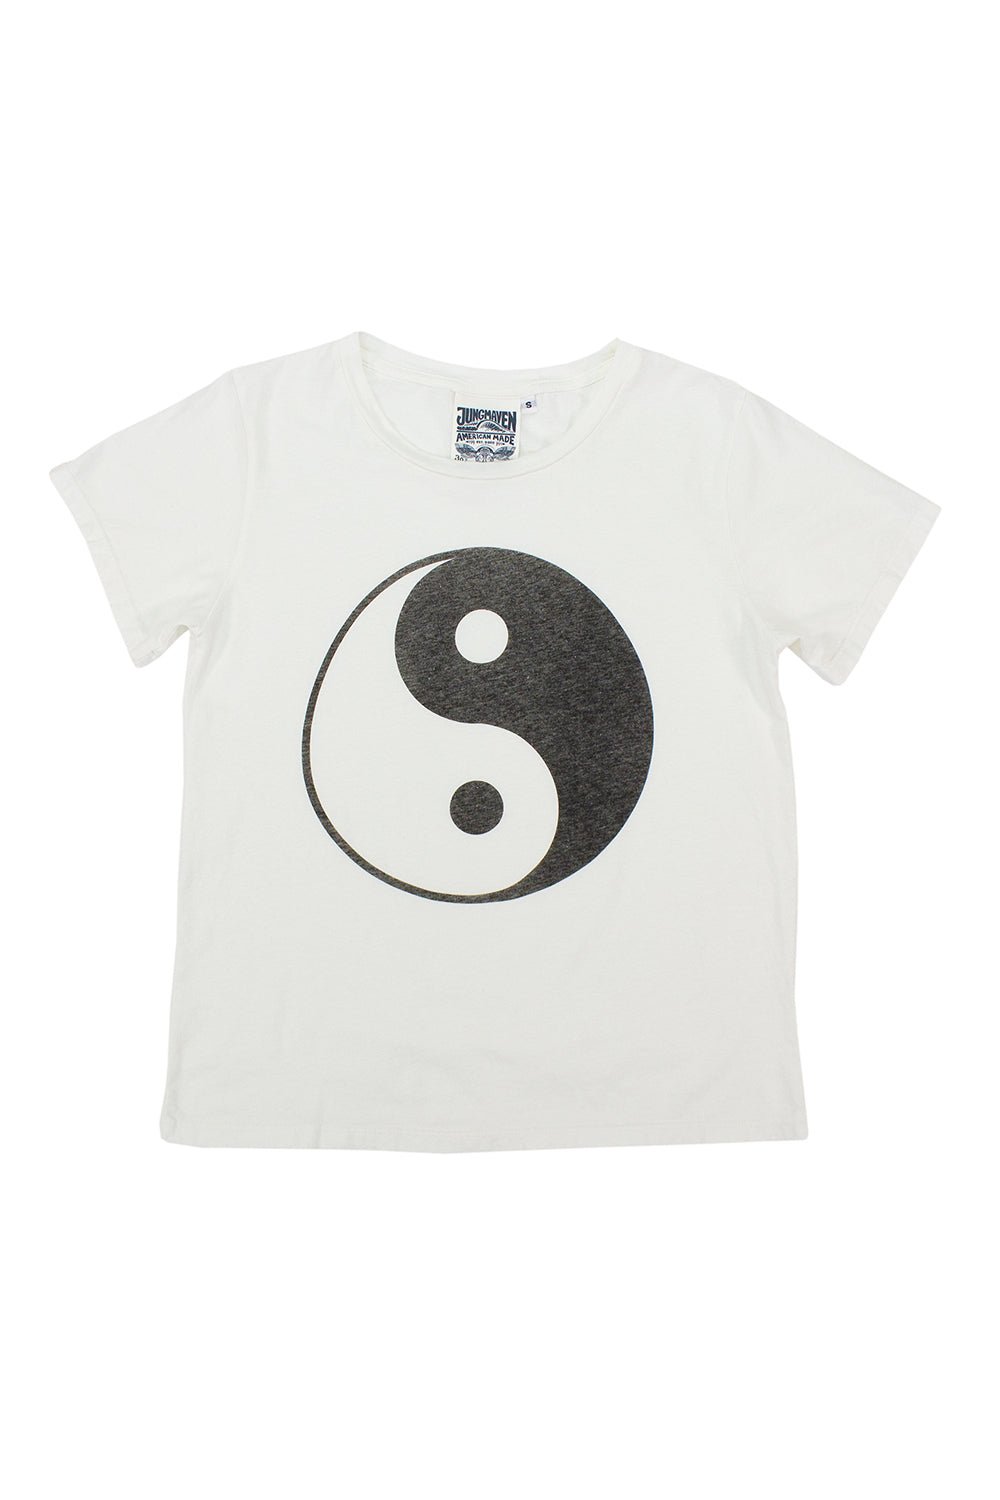 Yin Yang Ojai Tee | Jungmaven Hemp Clothing & Accessories / Color: Washed White